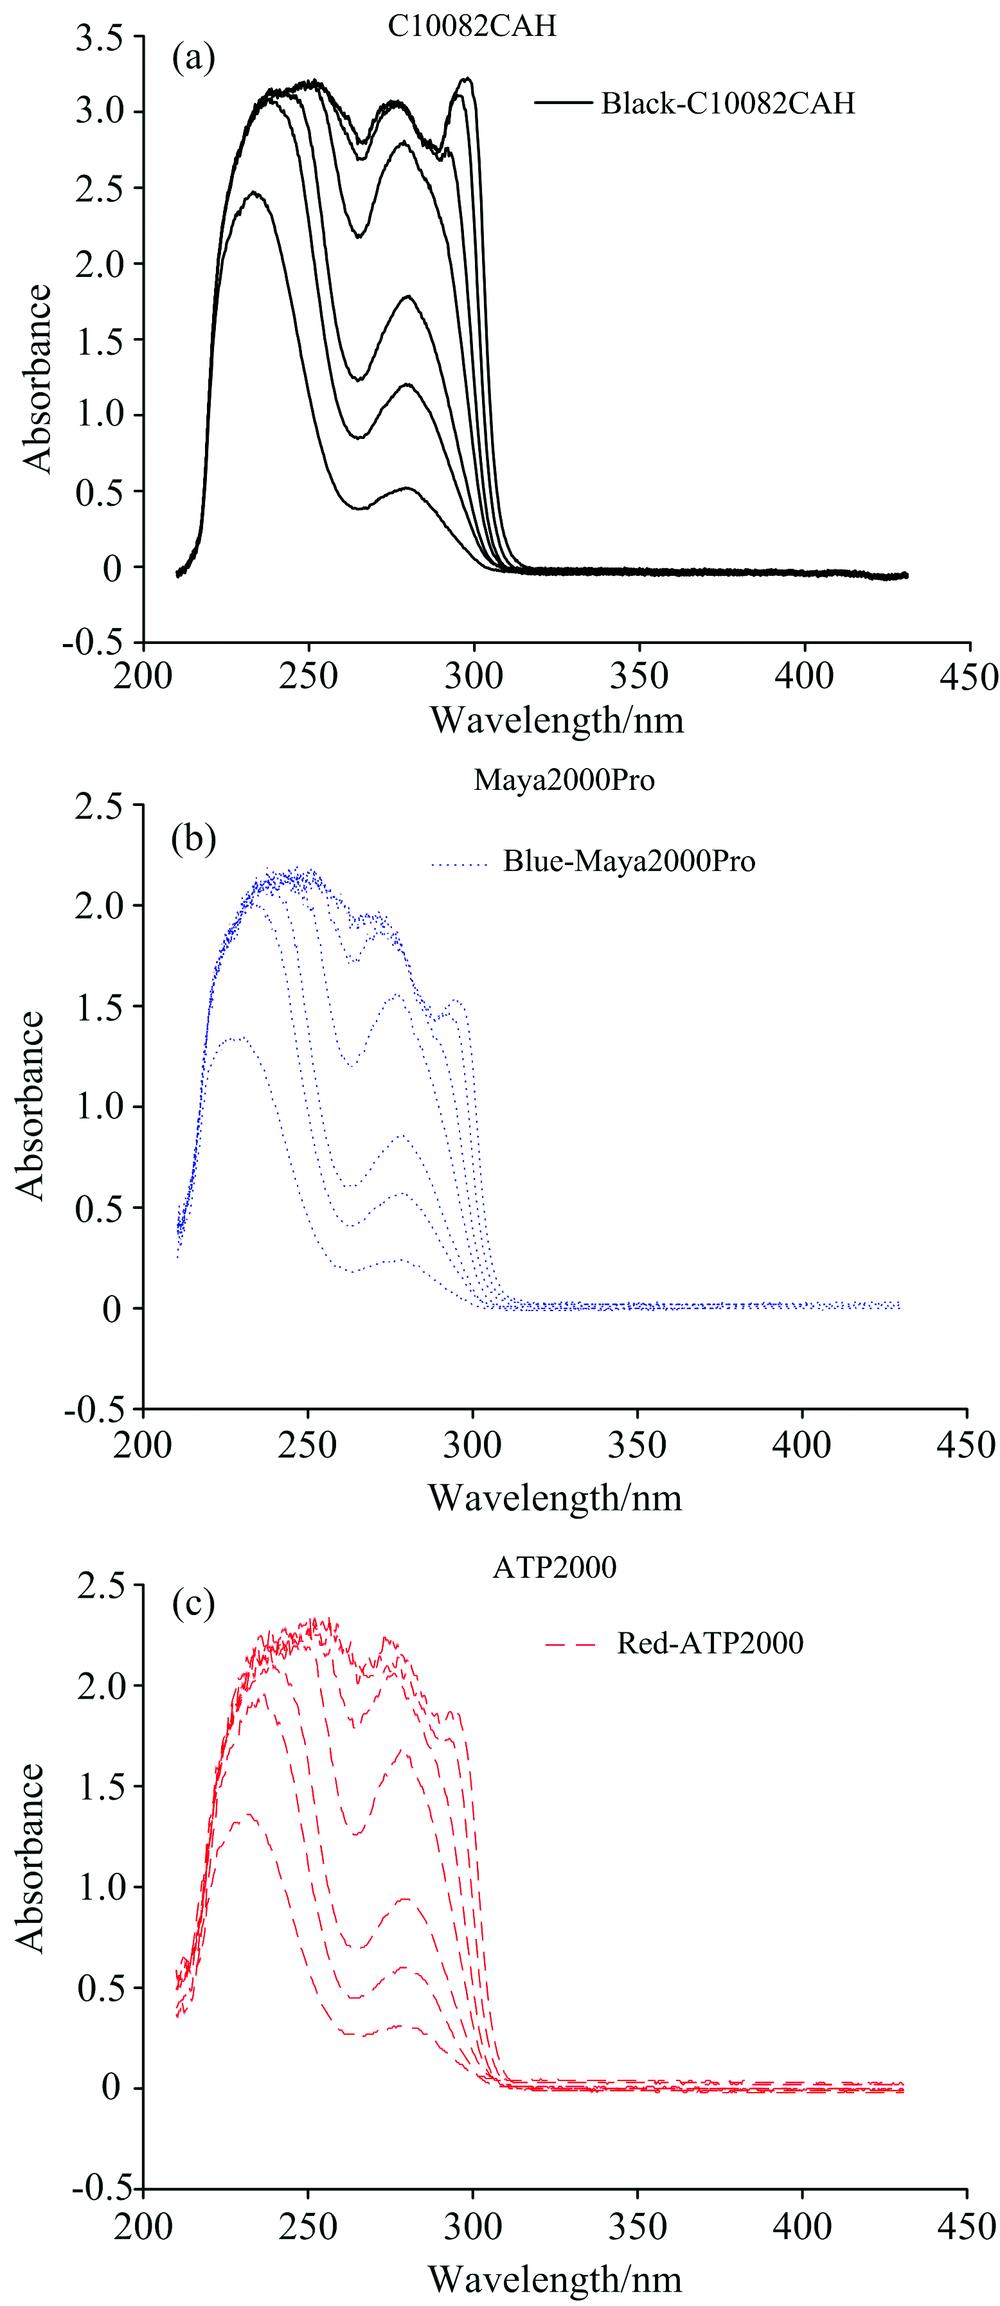 Spectra of 8 standard sample solutions measured under three spectrometers(a) Hamamatsu C10082CAH spectrometer;(b): Ocean Maya 200Pro spectrometer;(c): Optosky ATP2000 spectrometer